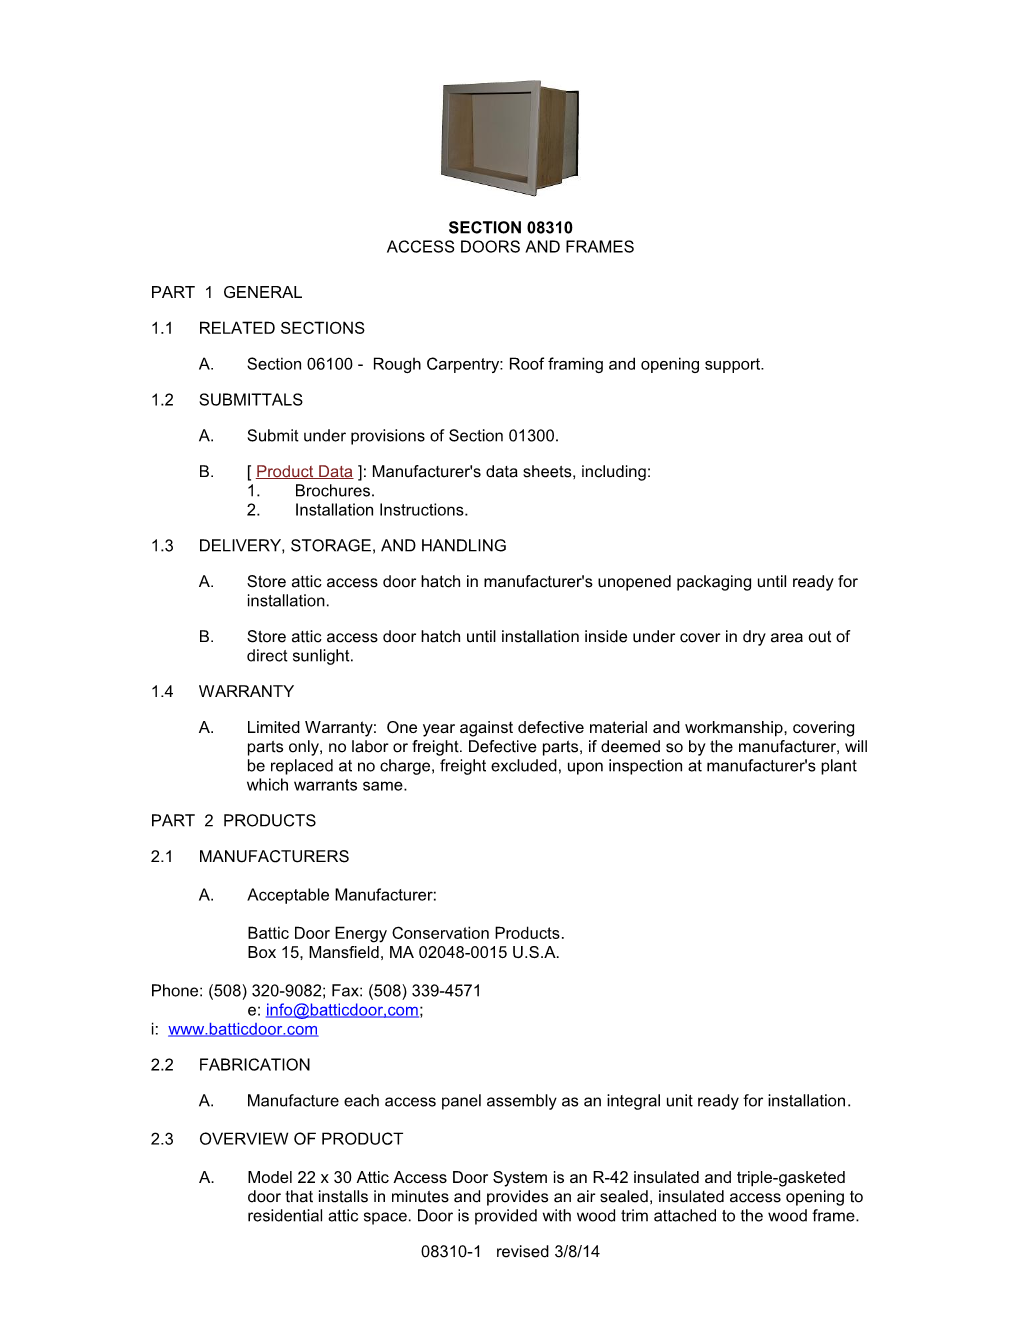 Attic Access Door CSI Specifications Section 08310